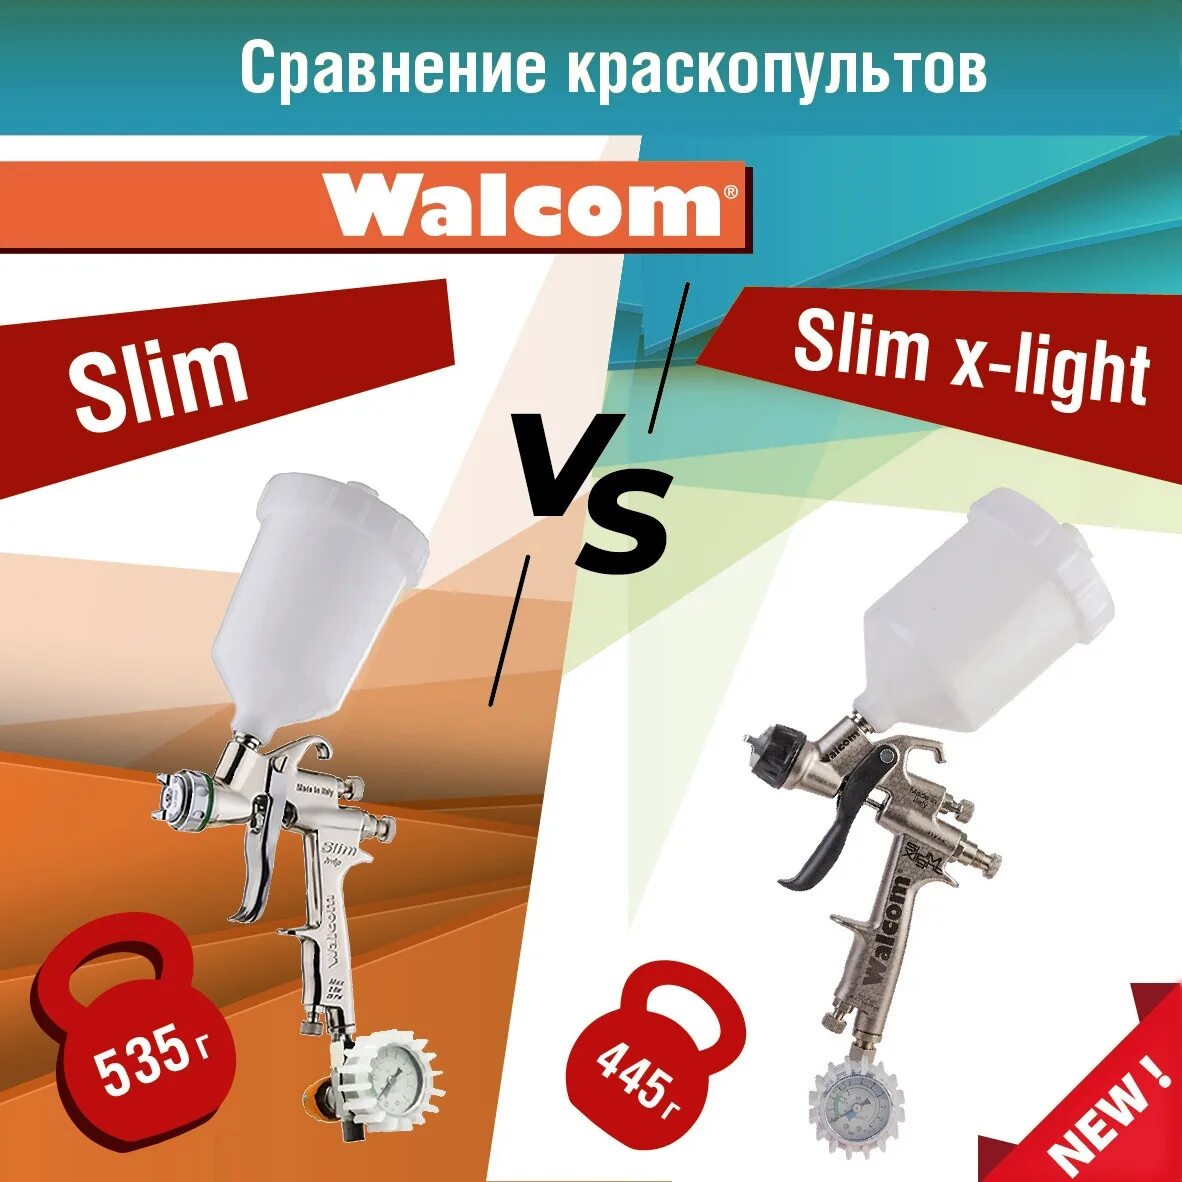 Walcom slim xlight. RPS для краскопульта Walcom Slim. Краскопульт Walcom Slim Xlight HVLP 1.3. Фильтр для краскопульта Slim.